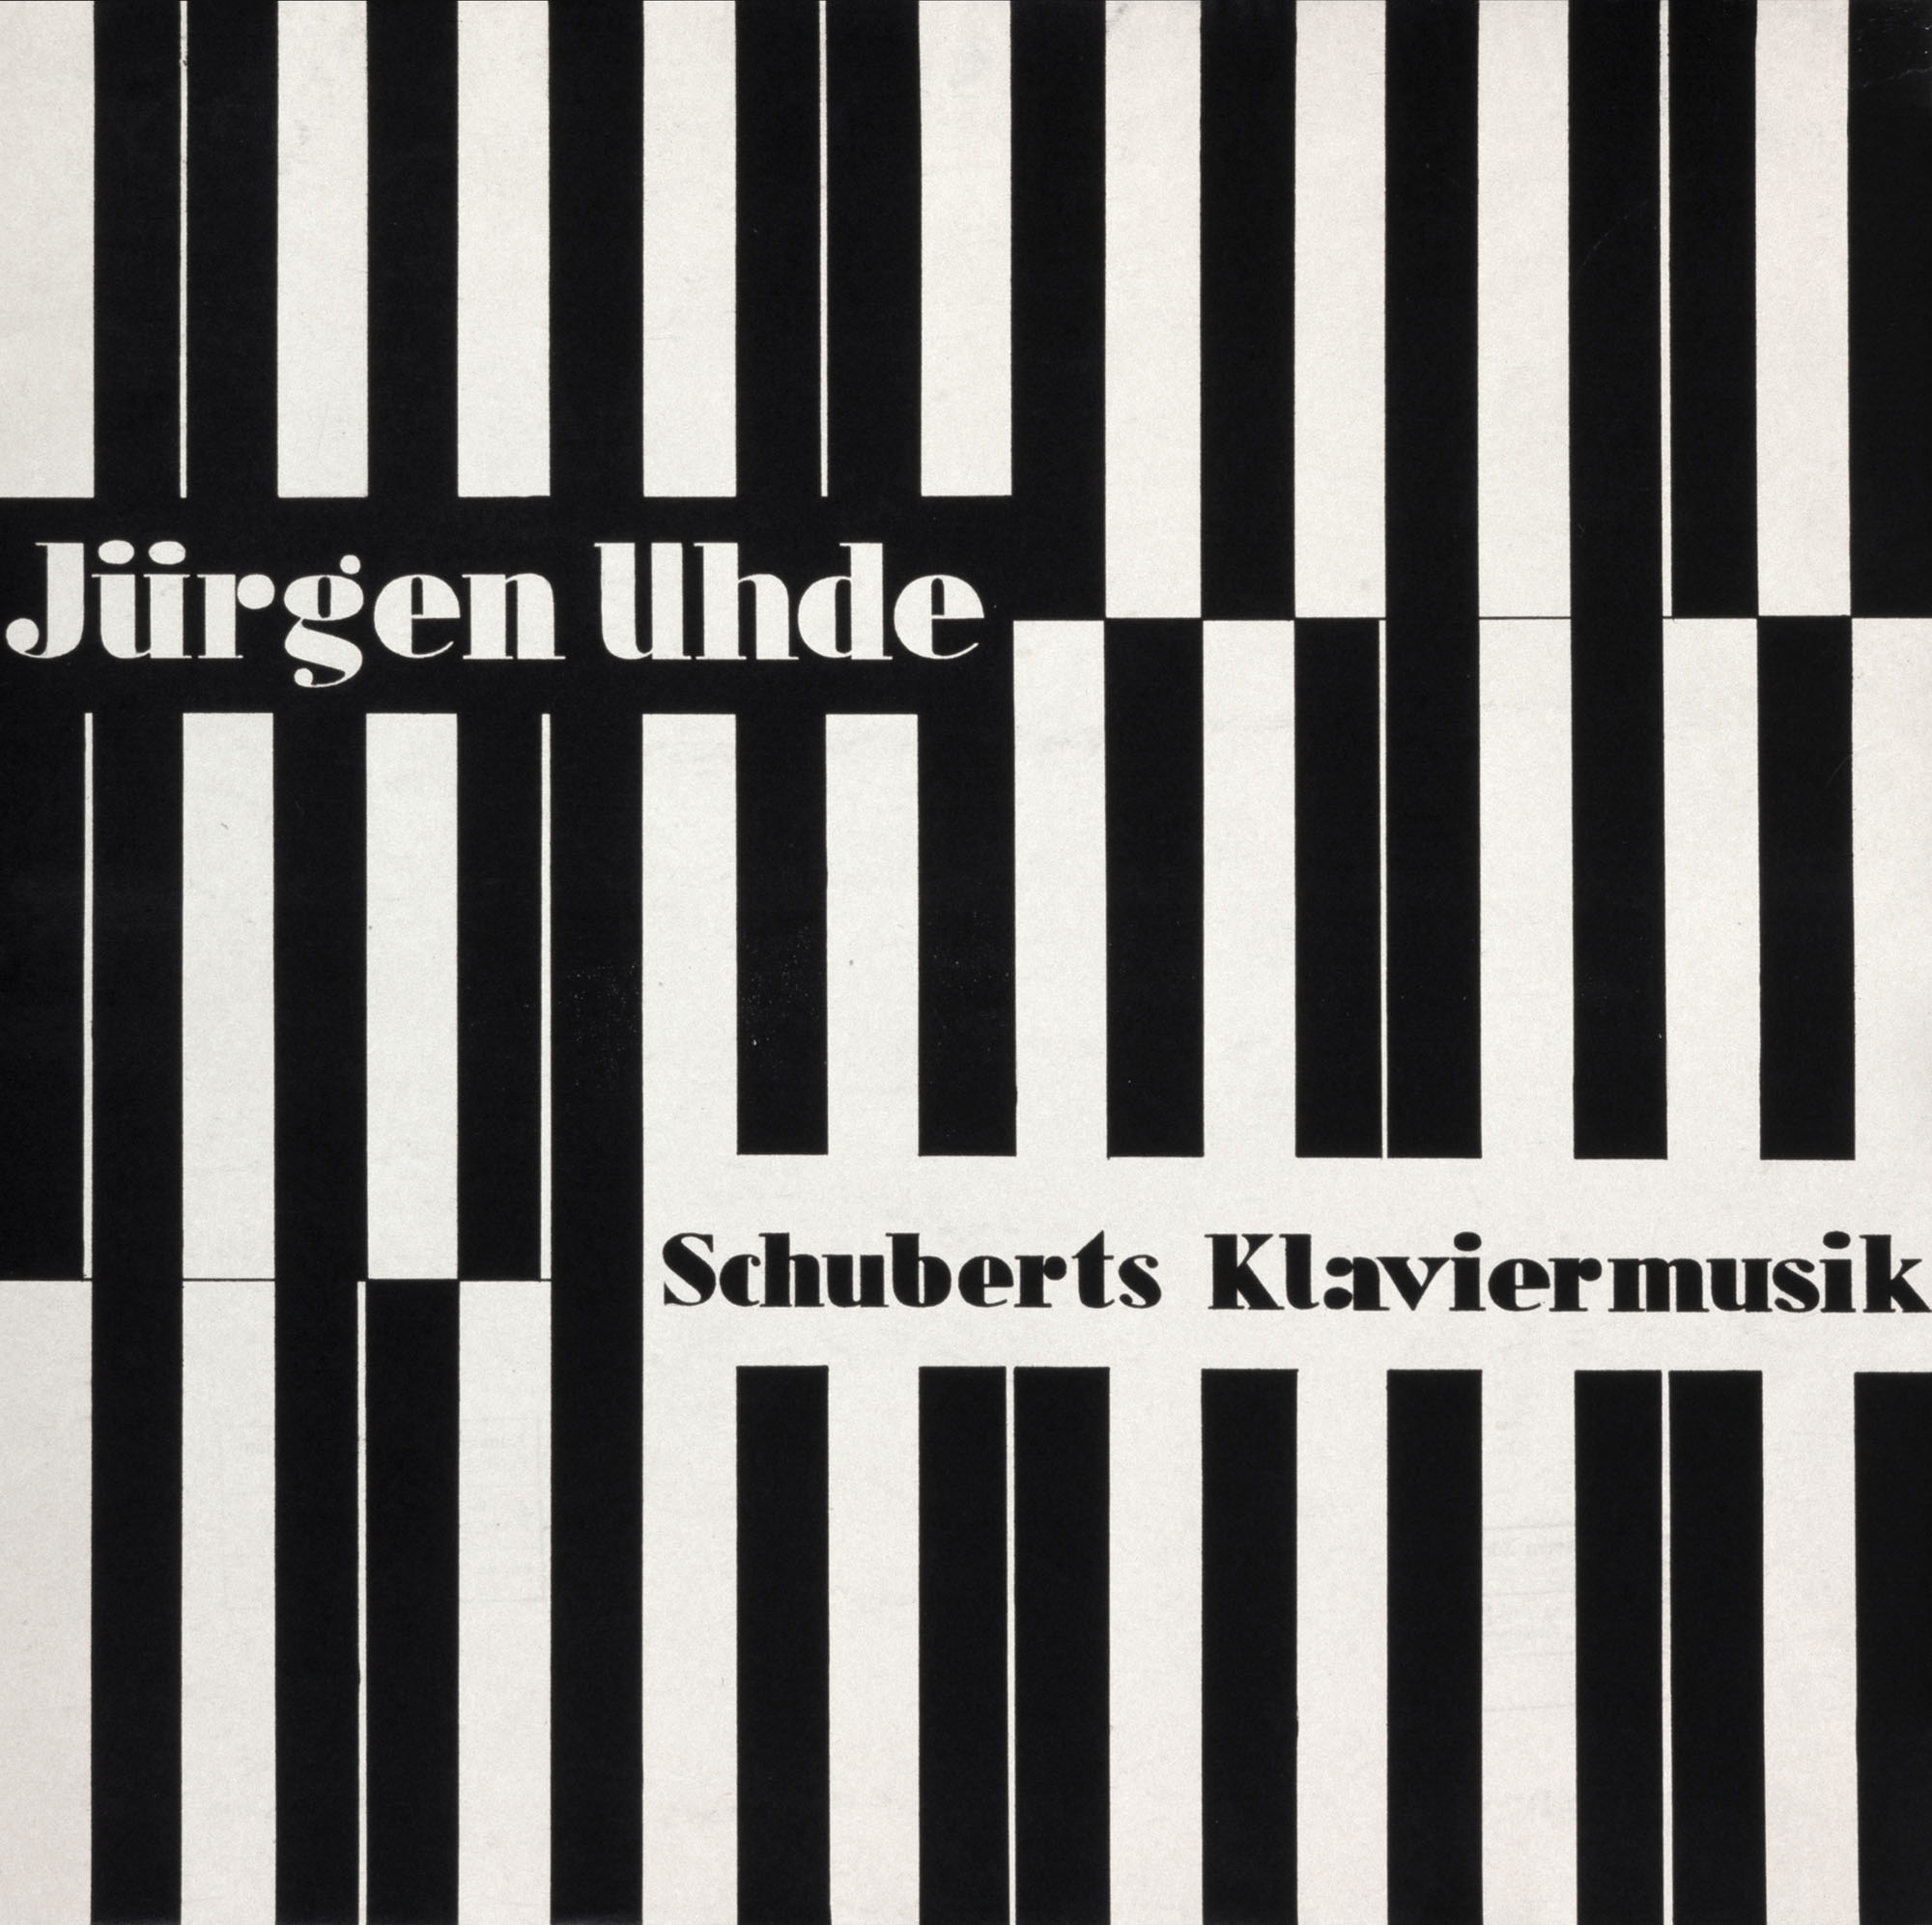 Jürgen Uhde – Konzertante Klaviermusik Otl Aicher Plakat